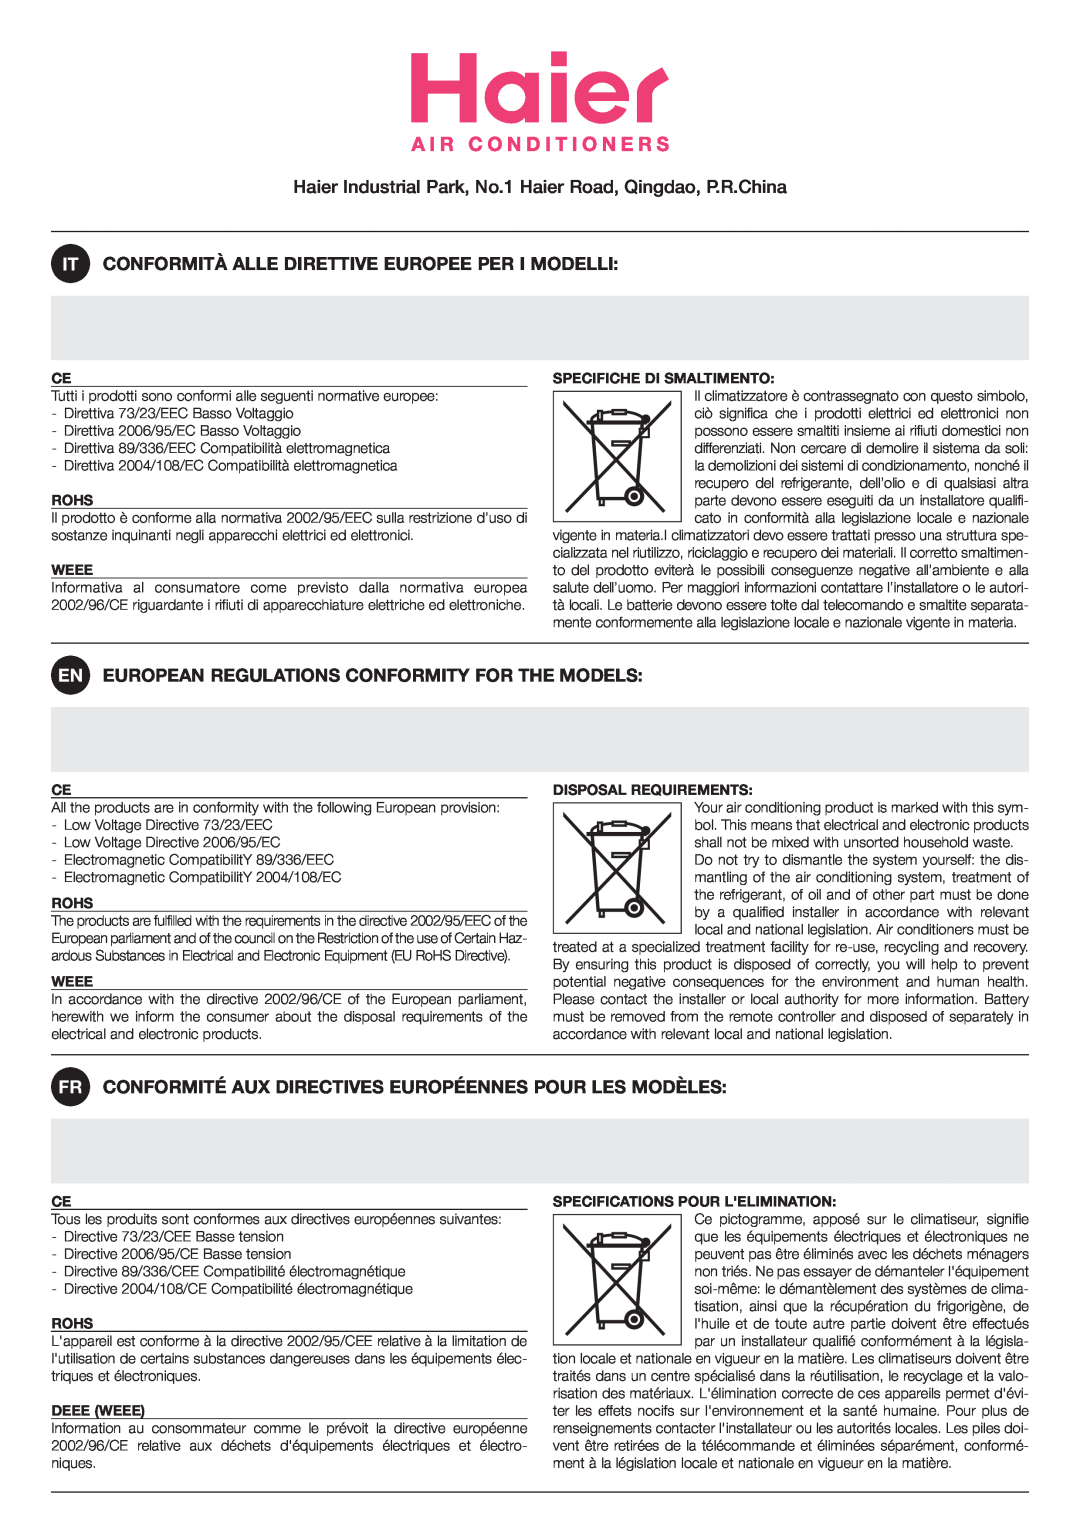 Haier 001051, HSU-0912RF03 installation manual En European Regulations Conformity For The Models 